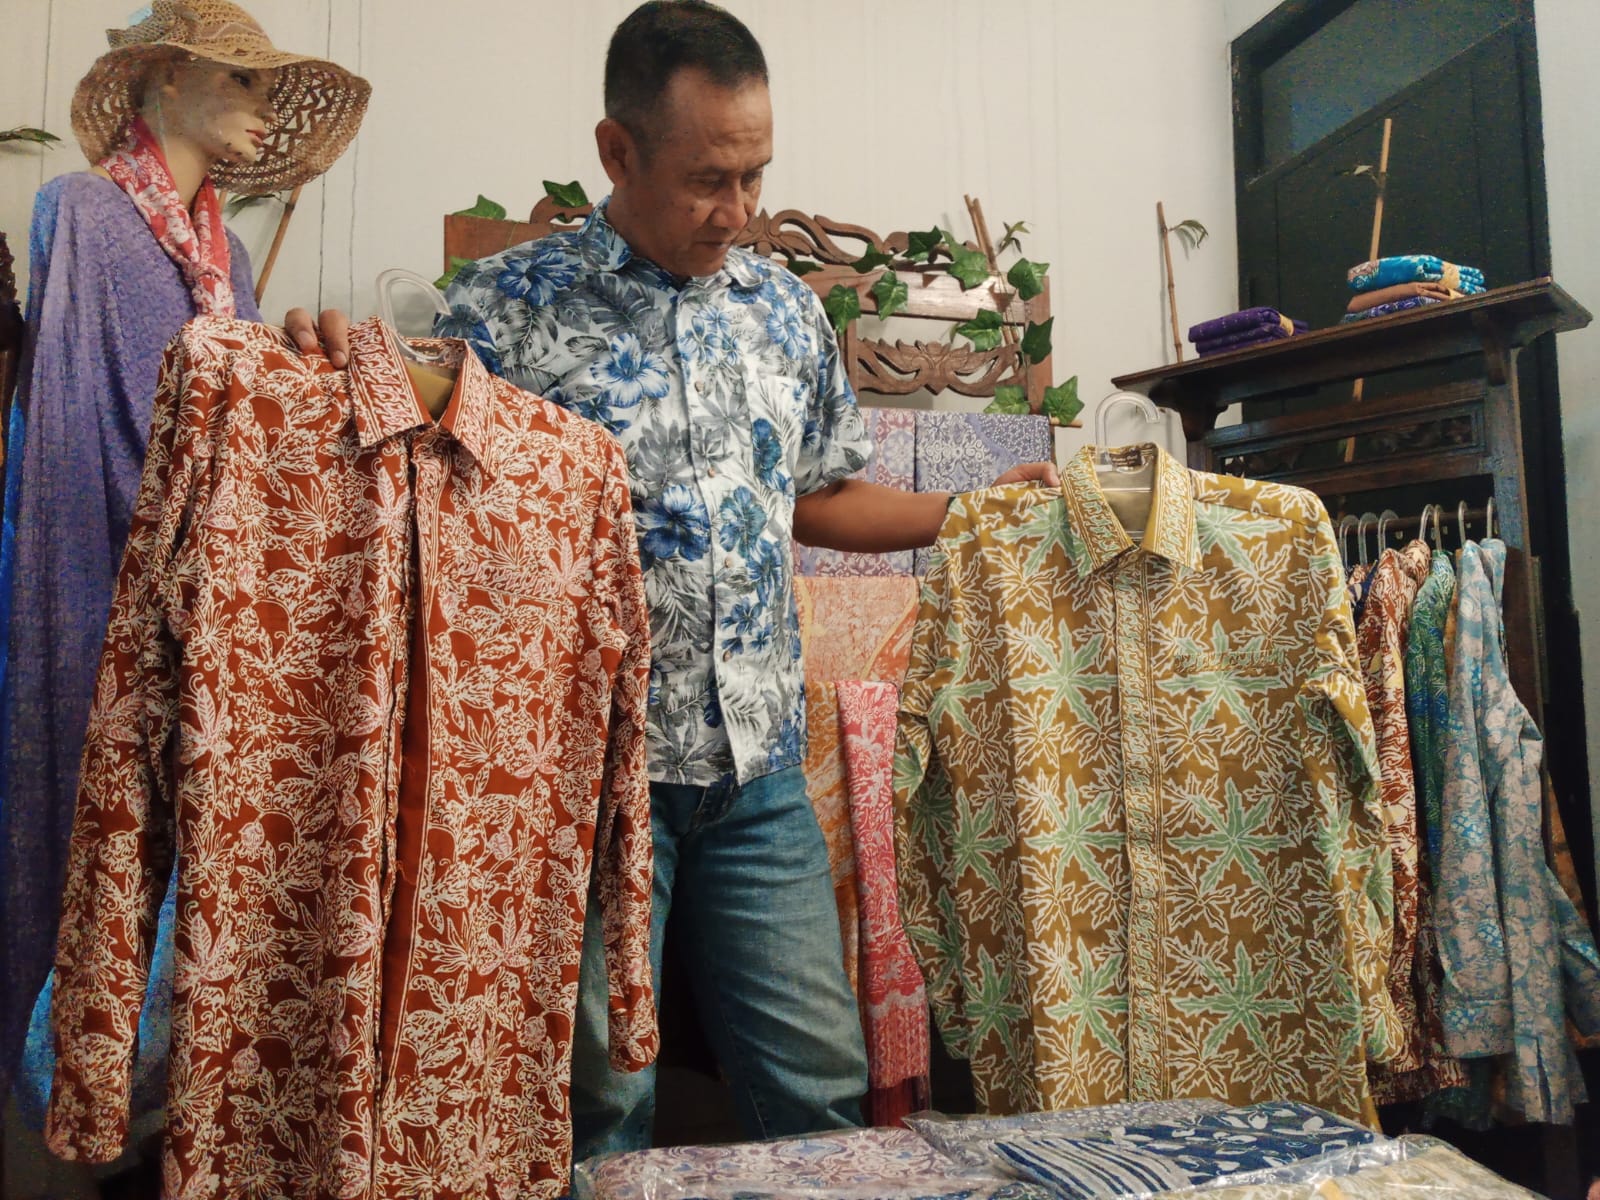 Doc. Triwanto Mardi Pemilik Galeri Lembur Batik saat Menunjukkan Kemeja dengan Motif Batik Khas Cimahi (mong)